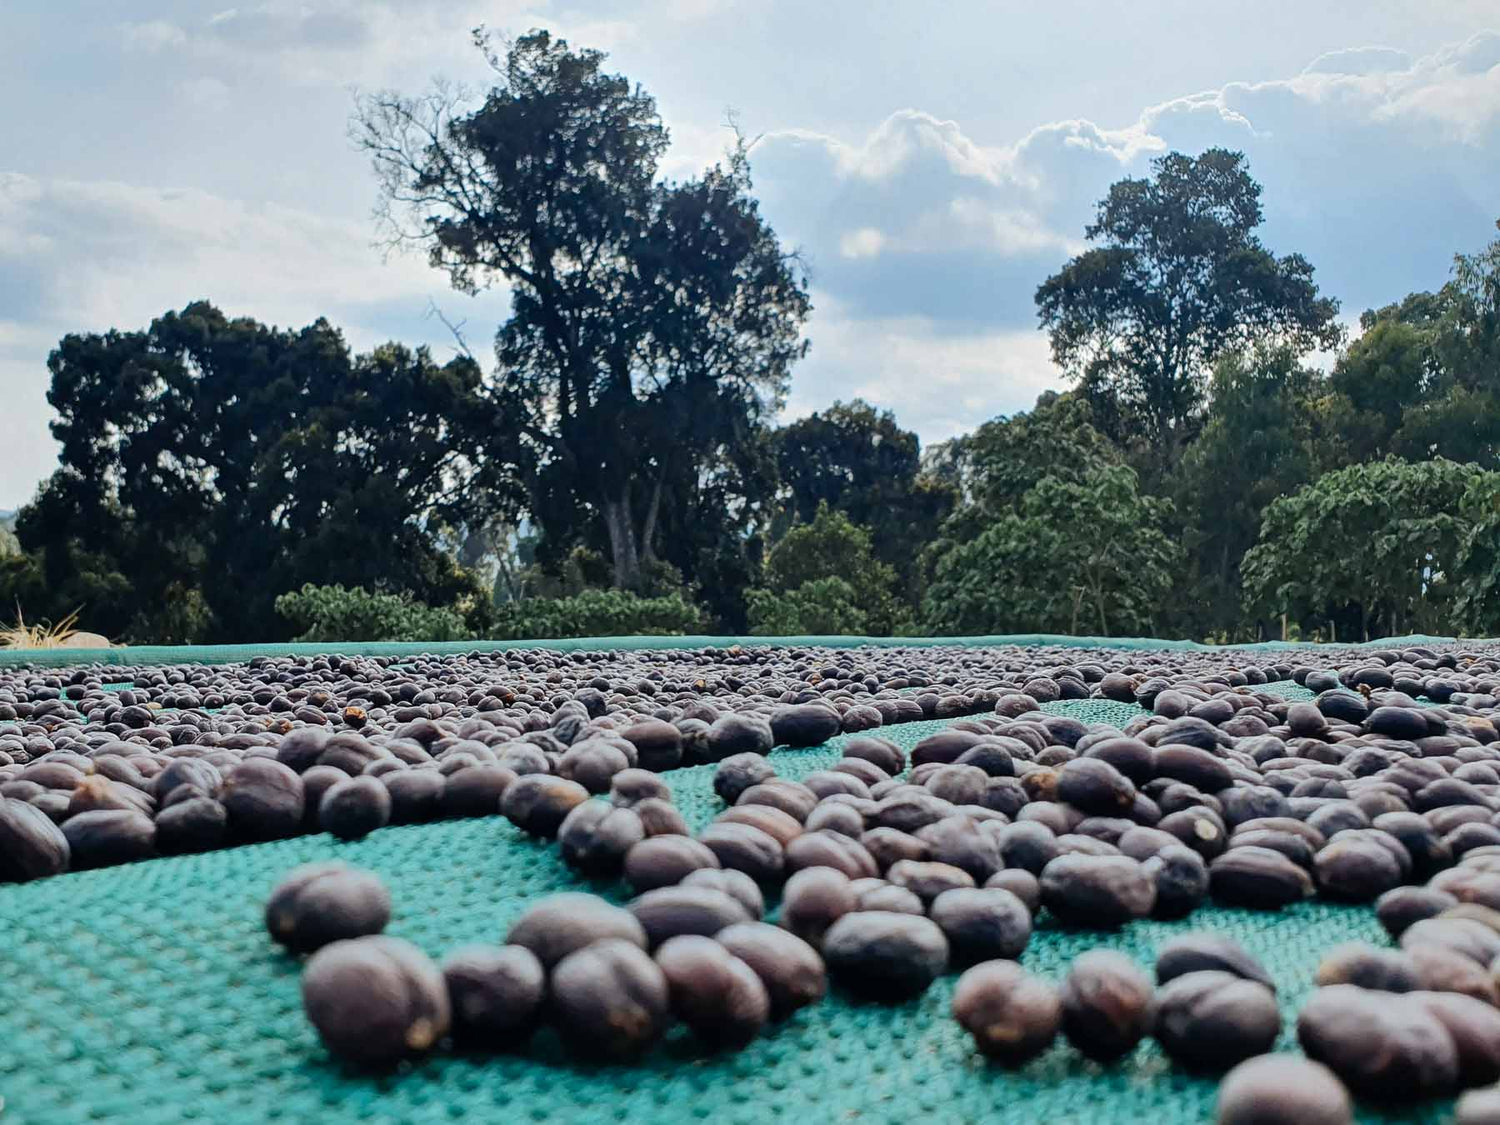 Ethiopia Damo coffee drying on tables